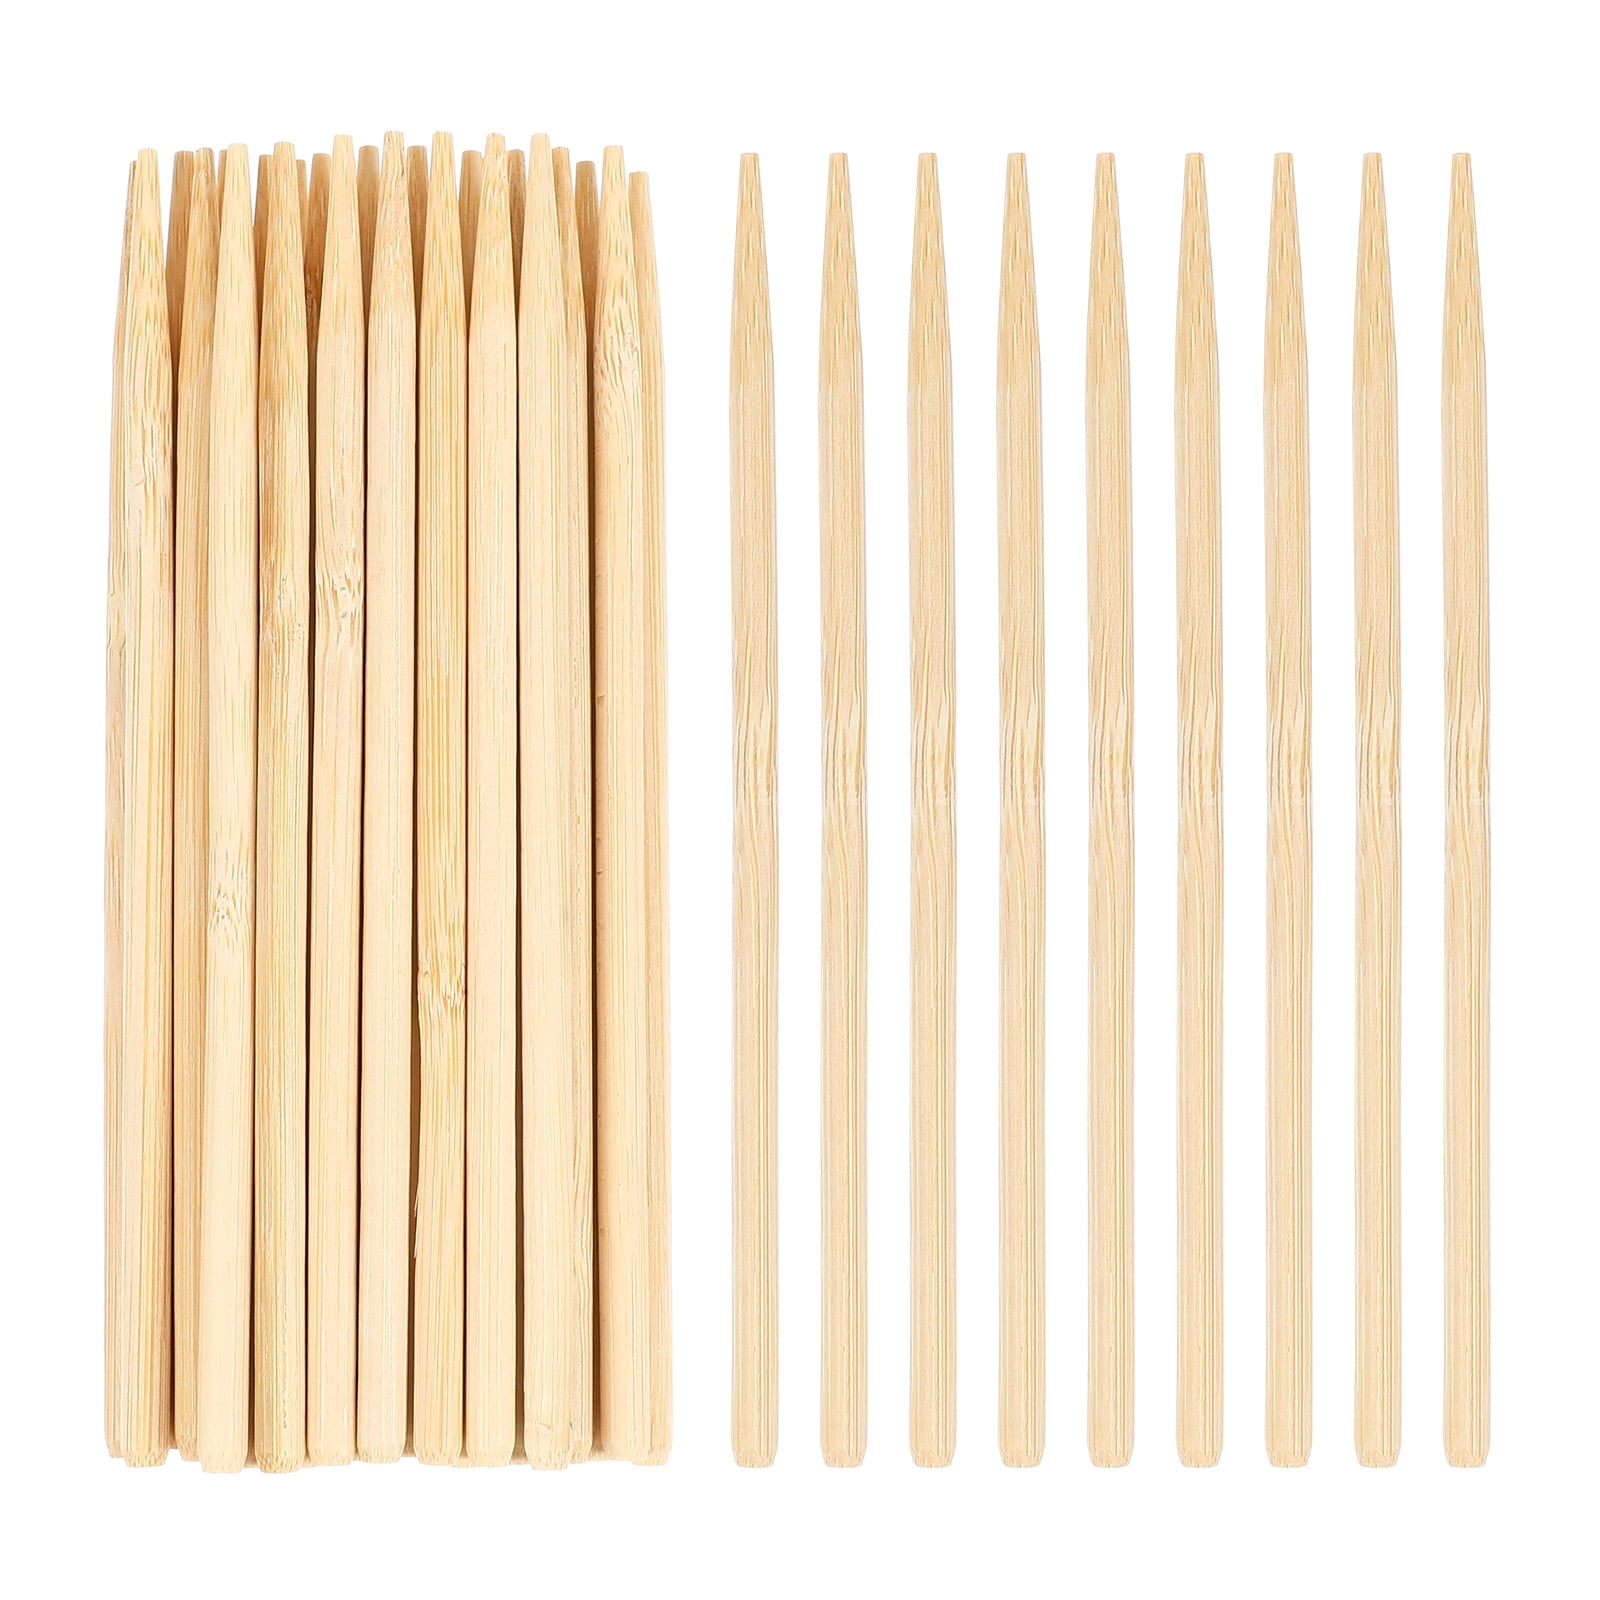  COHEALI Heavy Duty Wood Stylus Tools Wooden Stylus Stick Art  Sticks for Scratch Paper Art 150PCS : Arts, Crafts & Sewing